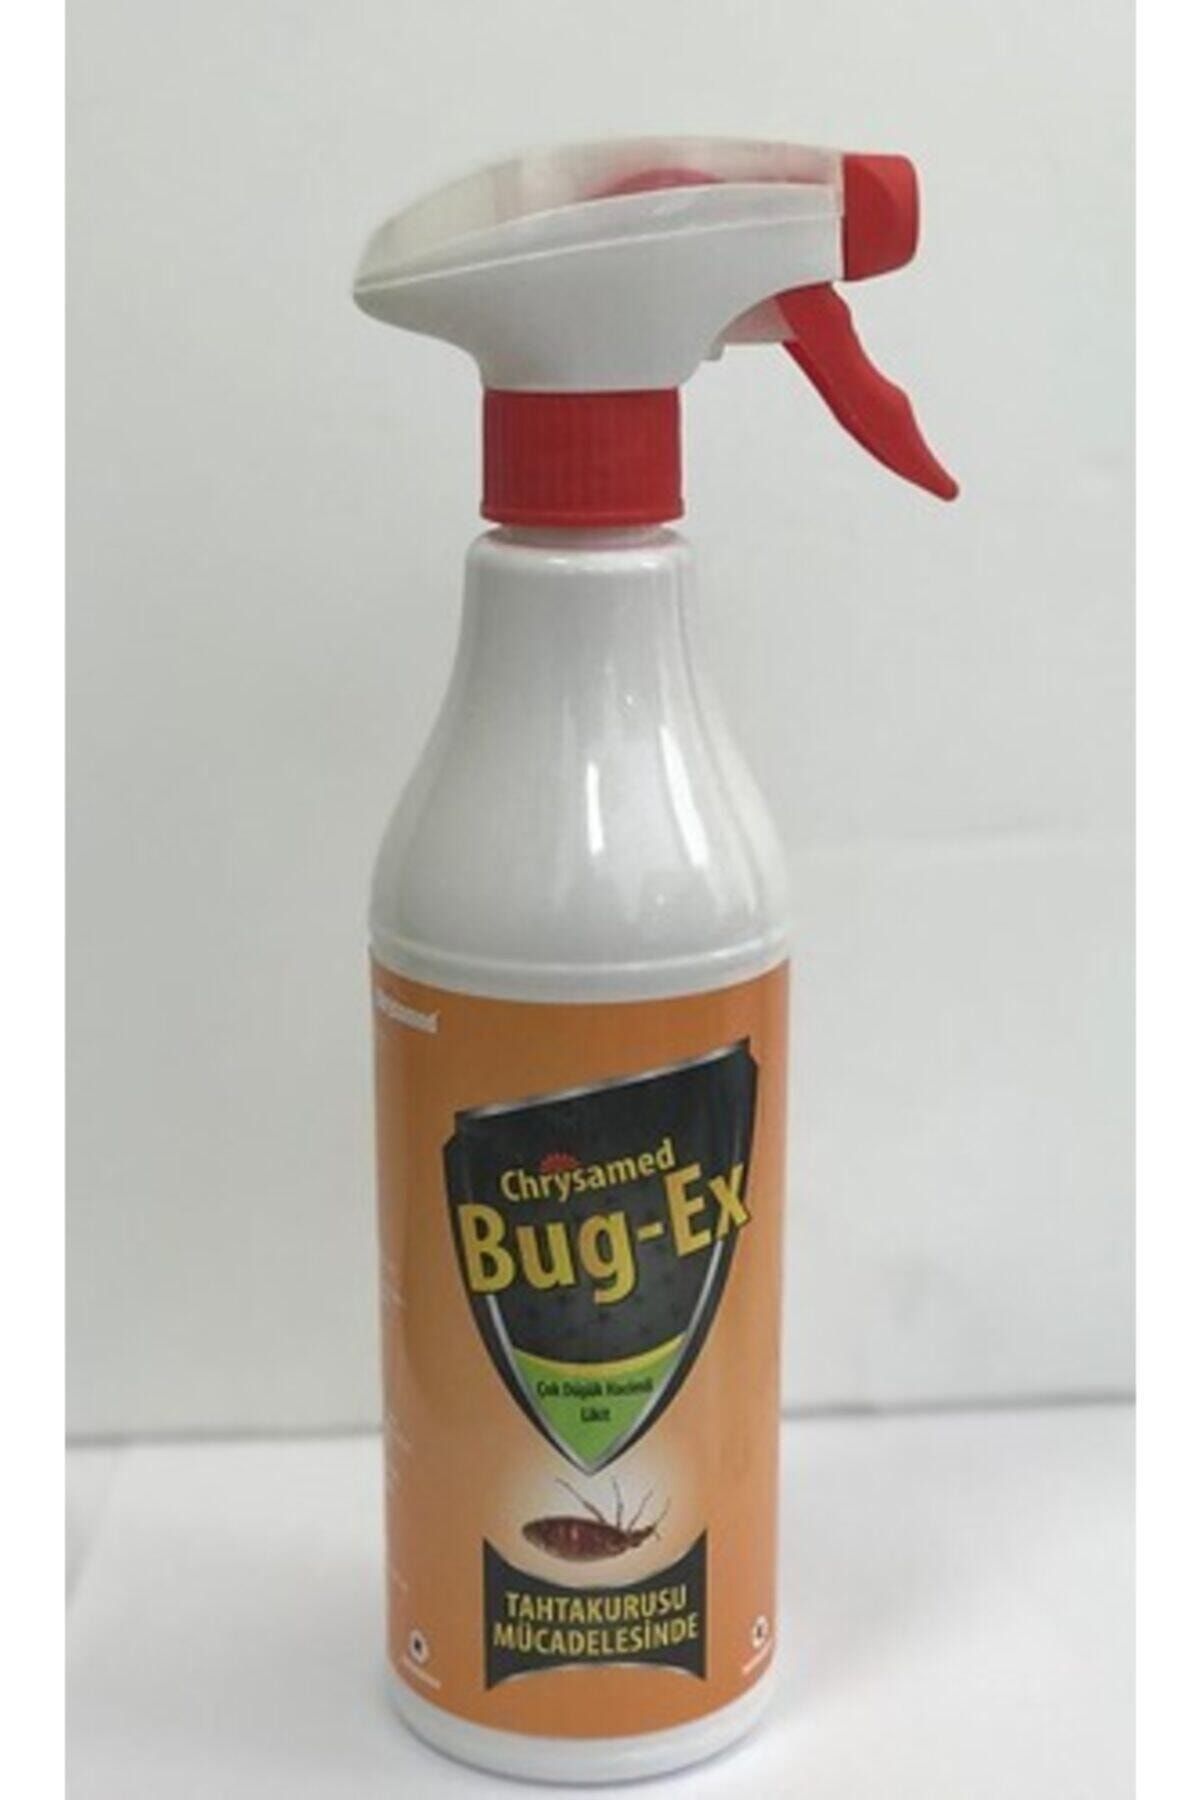 Chrysamed Tahtakurusu Ilacı Bug-ex 500 ml CHRY8987